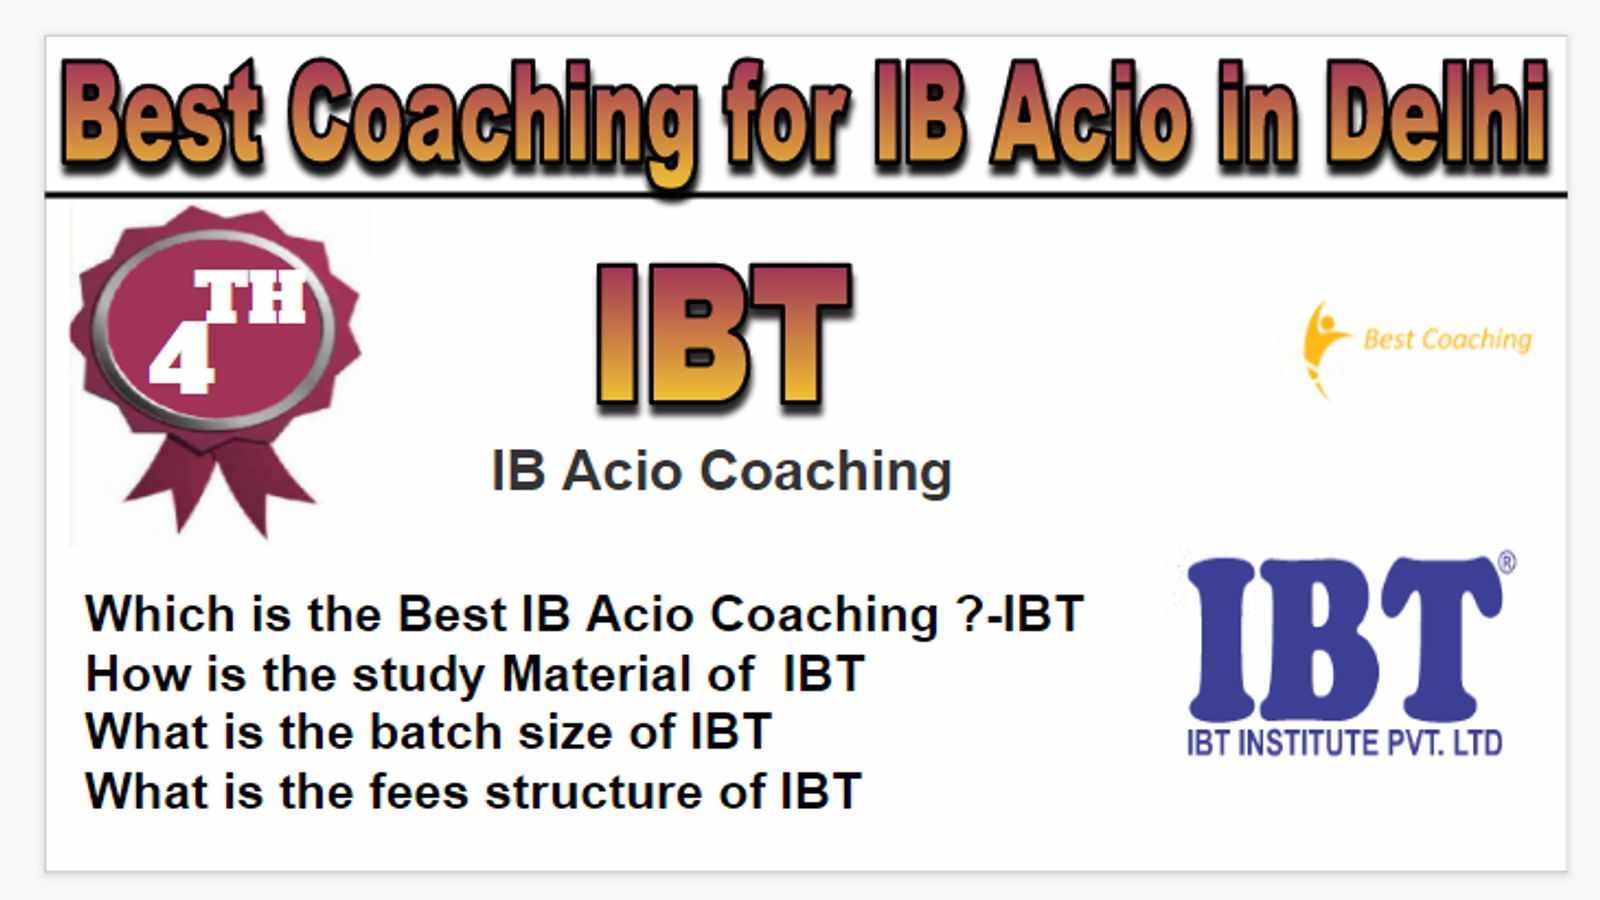 Rank 4 Best coaching for ib acio in Delhi